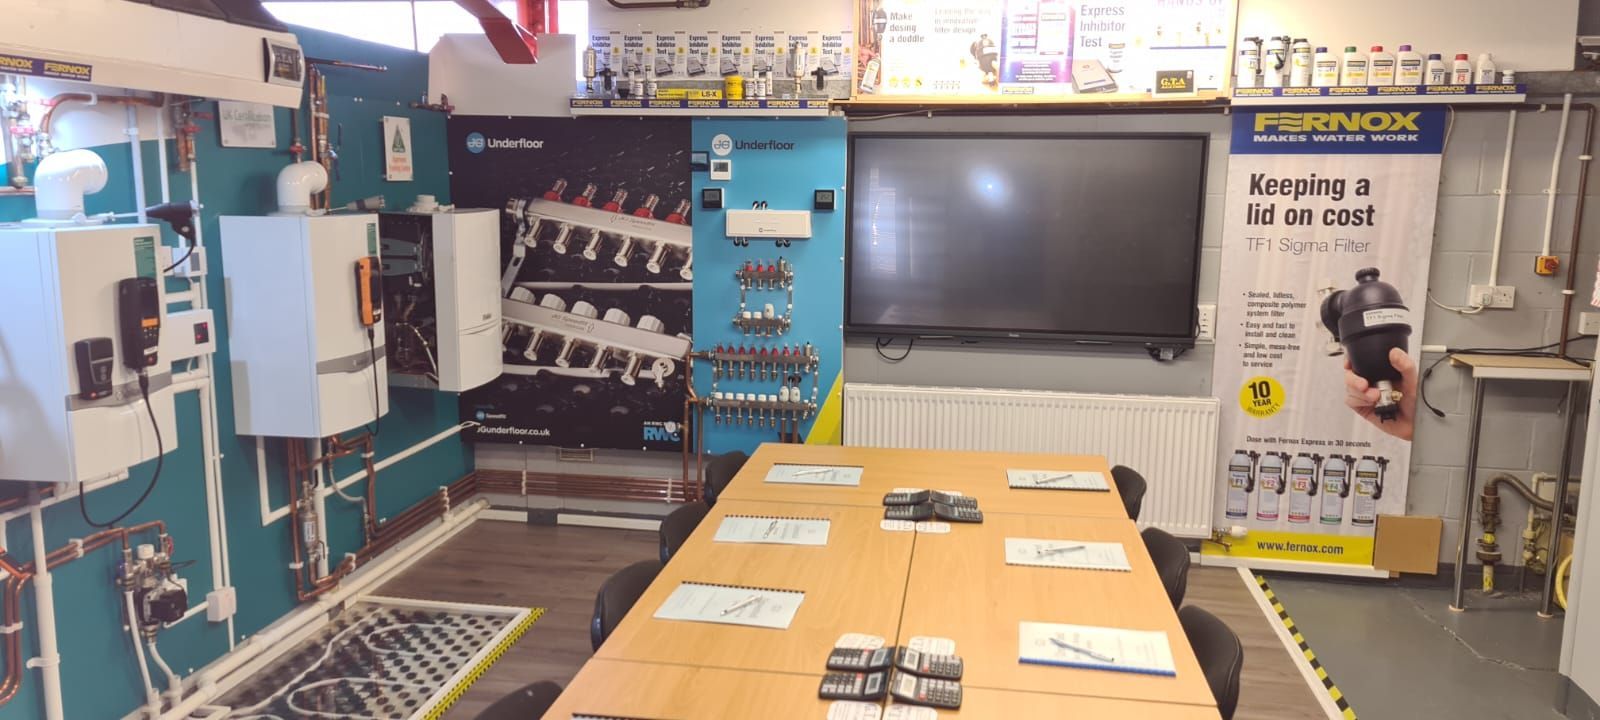 Gas Training & Assessment training centre classroom in Basildon